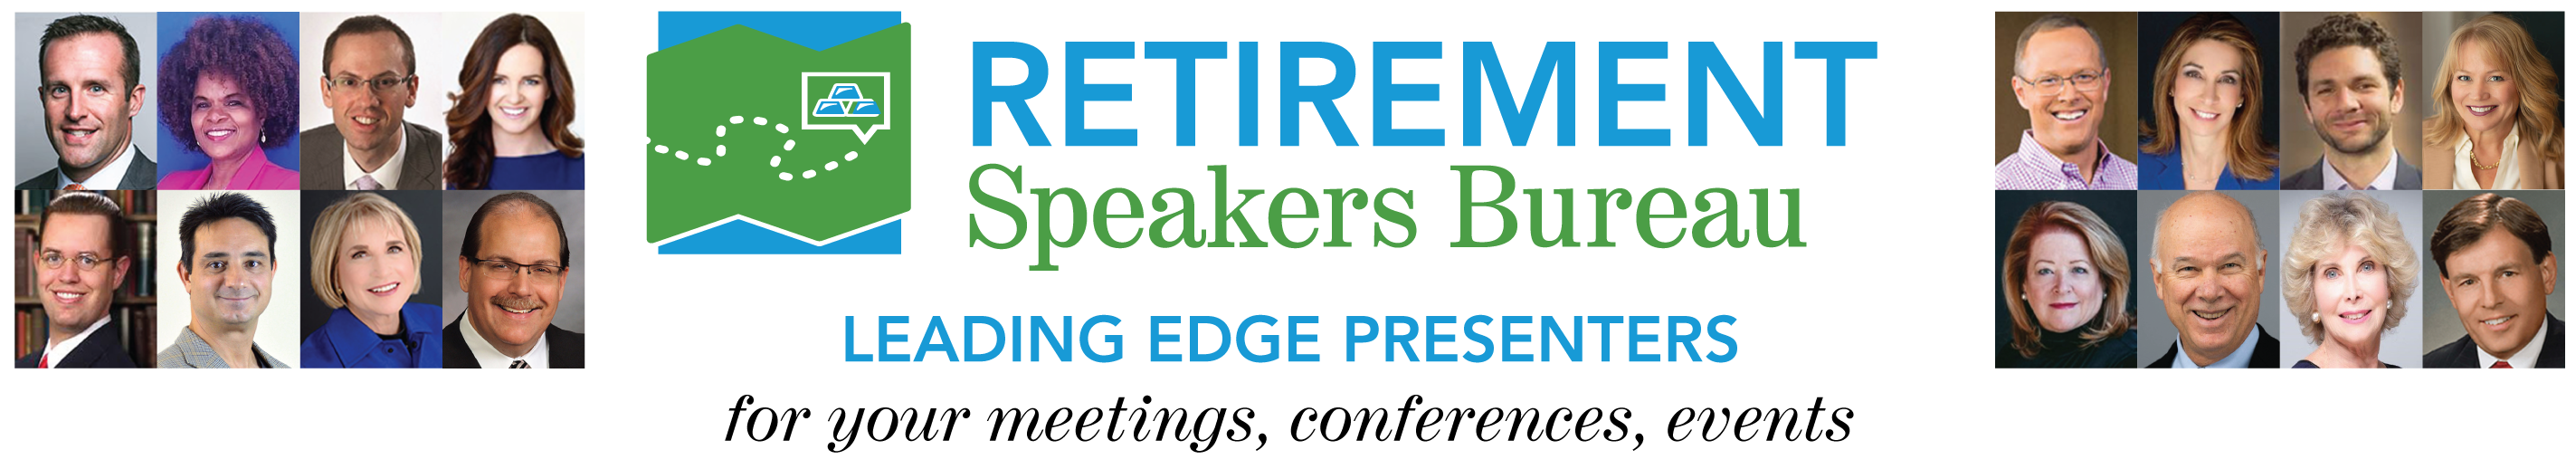 Retirement Speakers Bureau Header